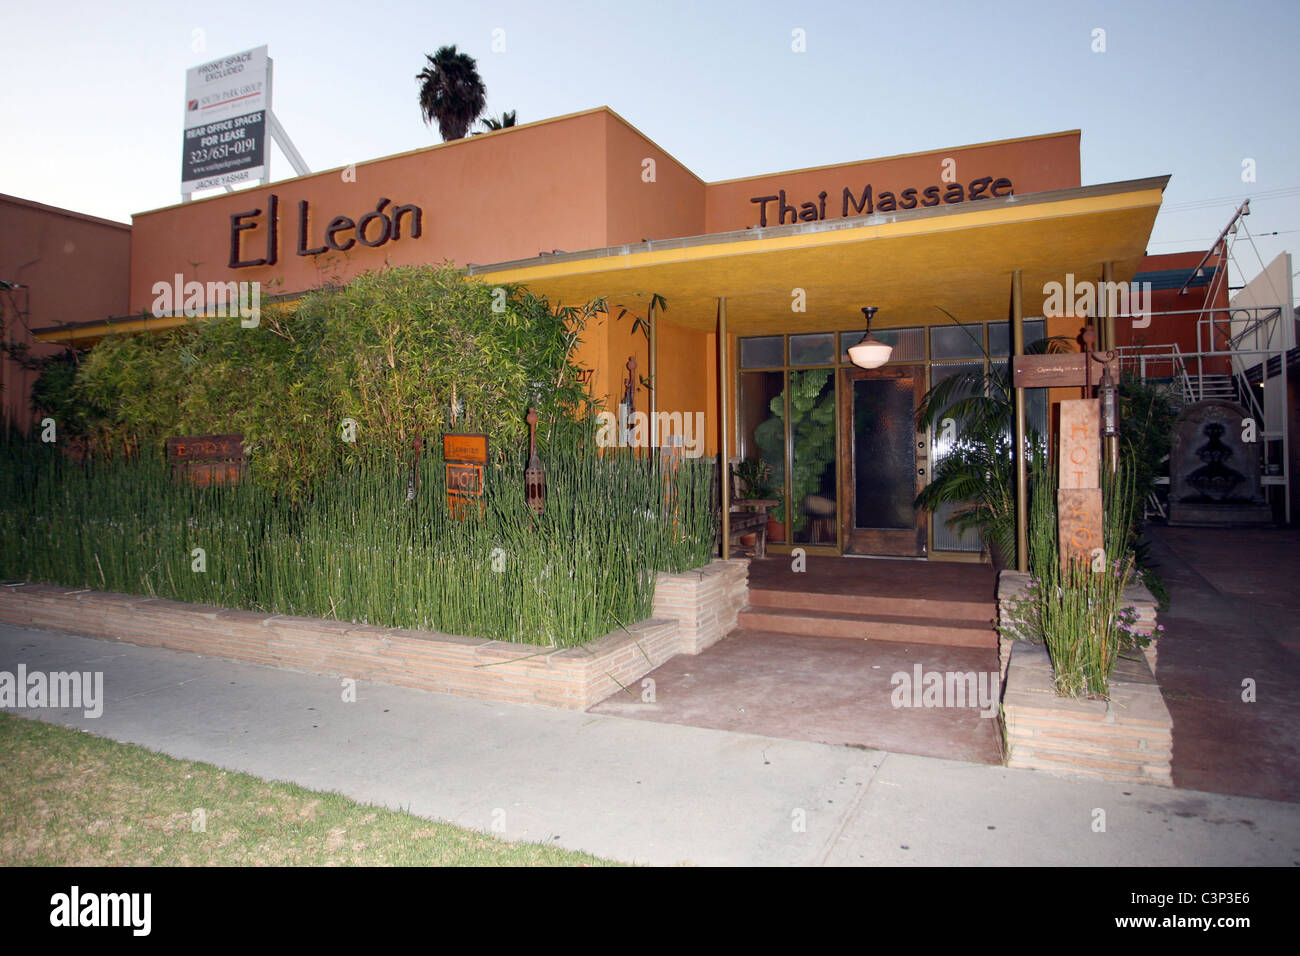 Halle Berry leaving the El Leon Thai Massage West Hollywood, California -  21.09.09 Stock Photo - Alamy